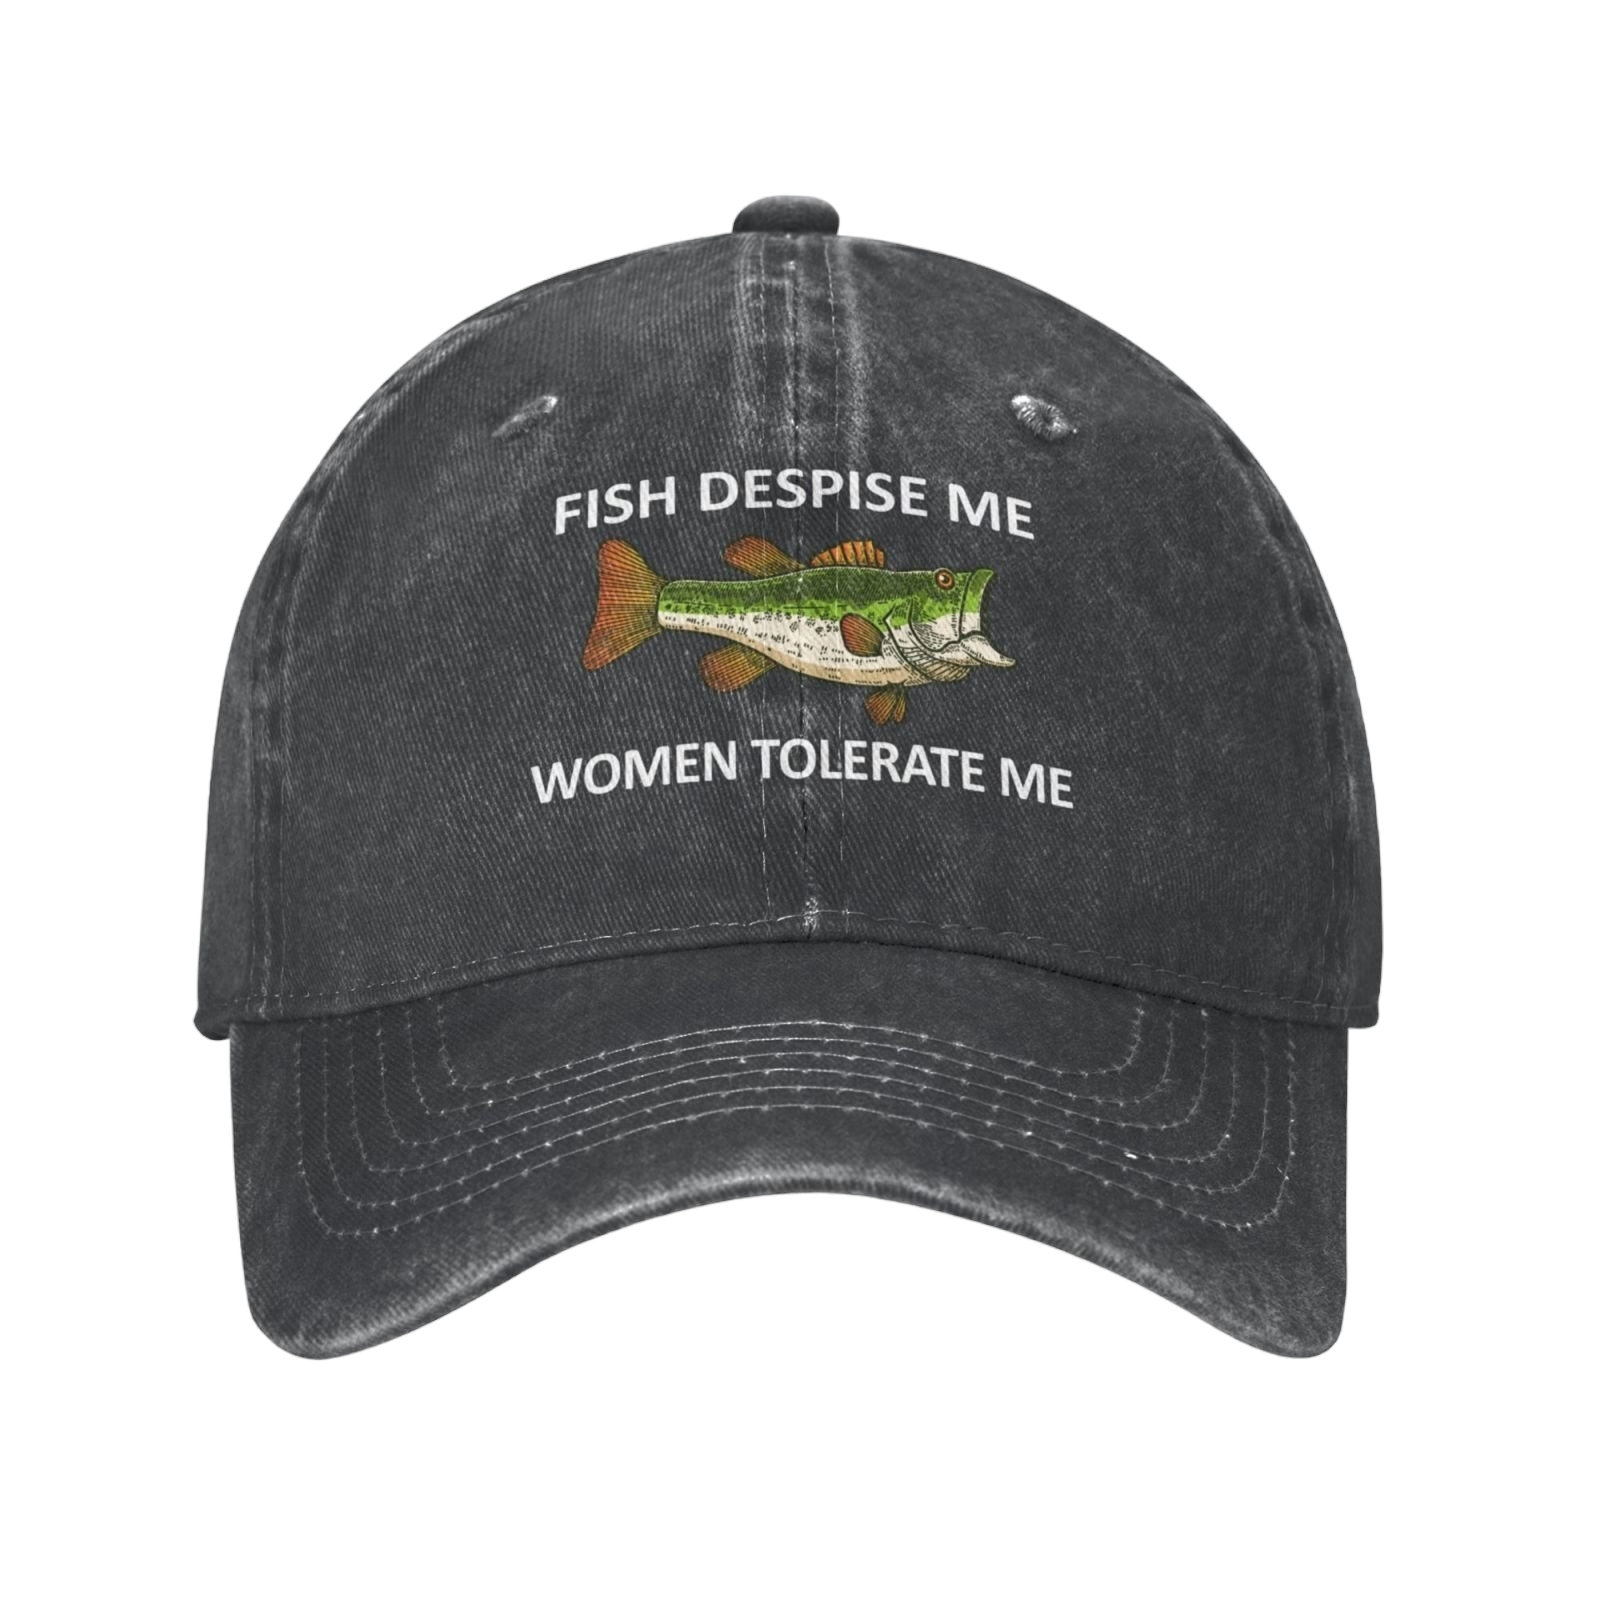 Funny Fishing Embroidered Baseball Hat for Fishermen